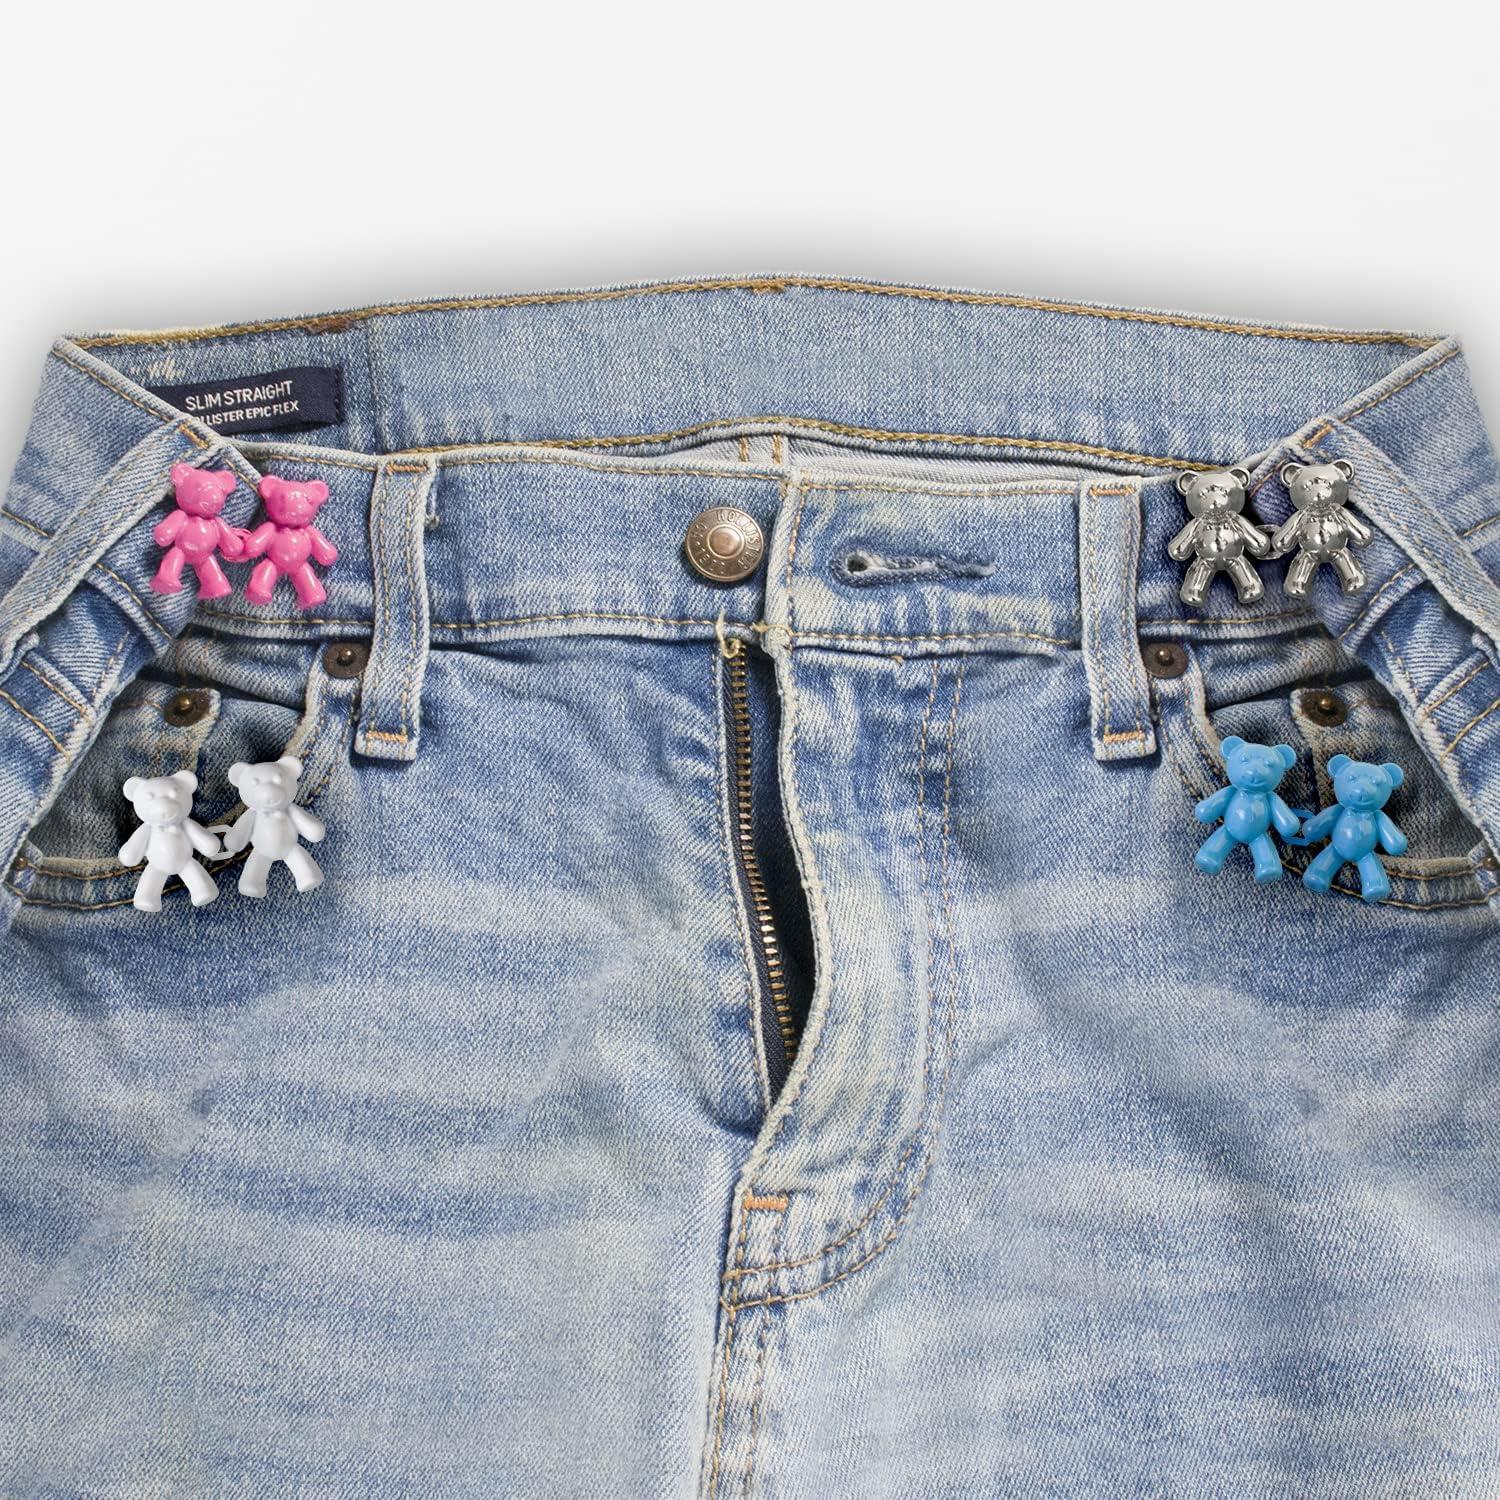 RichLuck Jeans Button, 2 Sets Adjustable Button for Jeans, Detachable Decorative Waist Buckles, Perfect Fit Tighten Waist Adjustment Instant Button